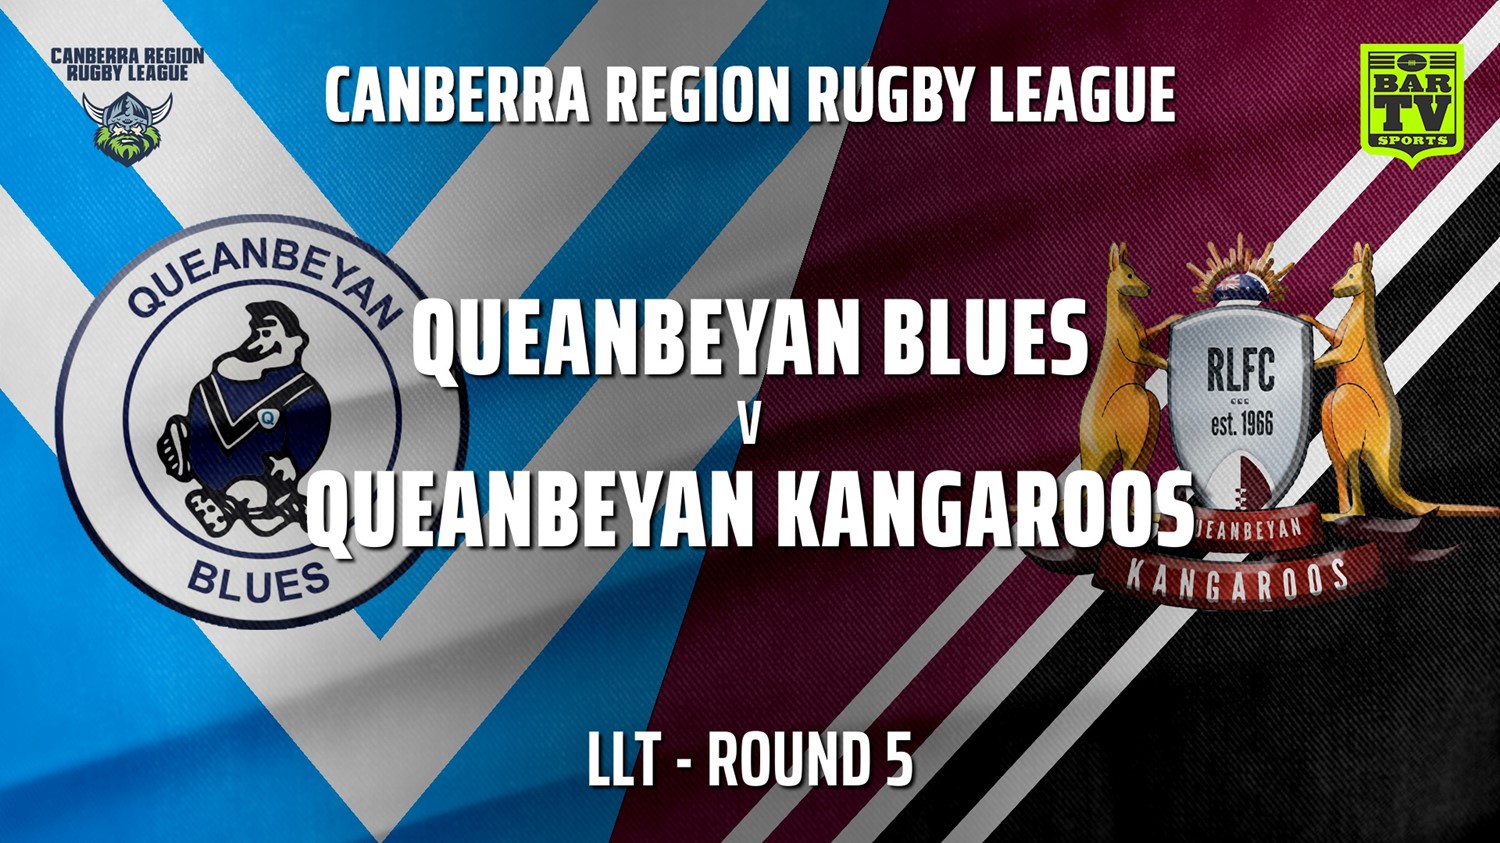 210508-CRRL Round 5 - LLT - Queanbeyan Blues v Queanbeyan Kangaroos Slate Image